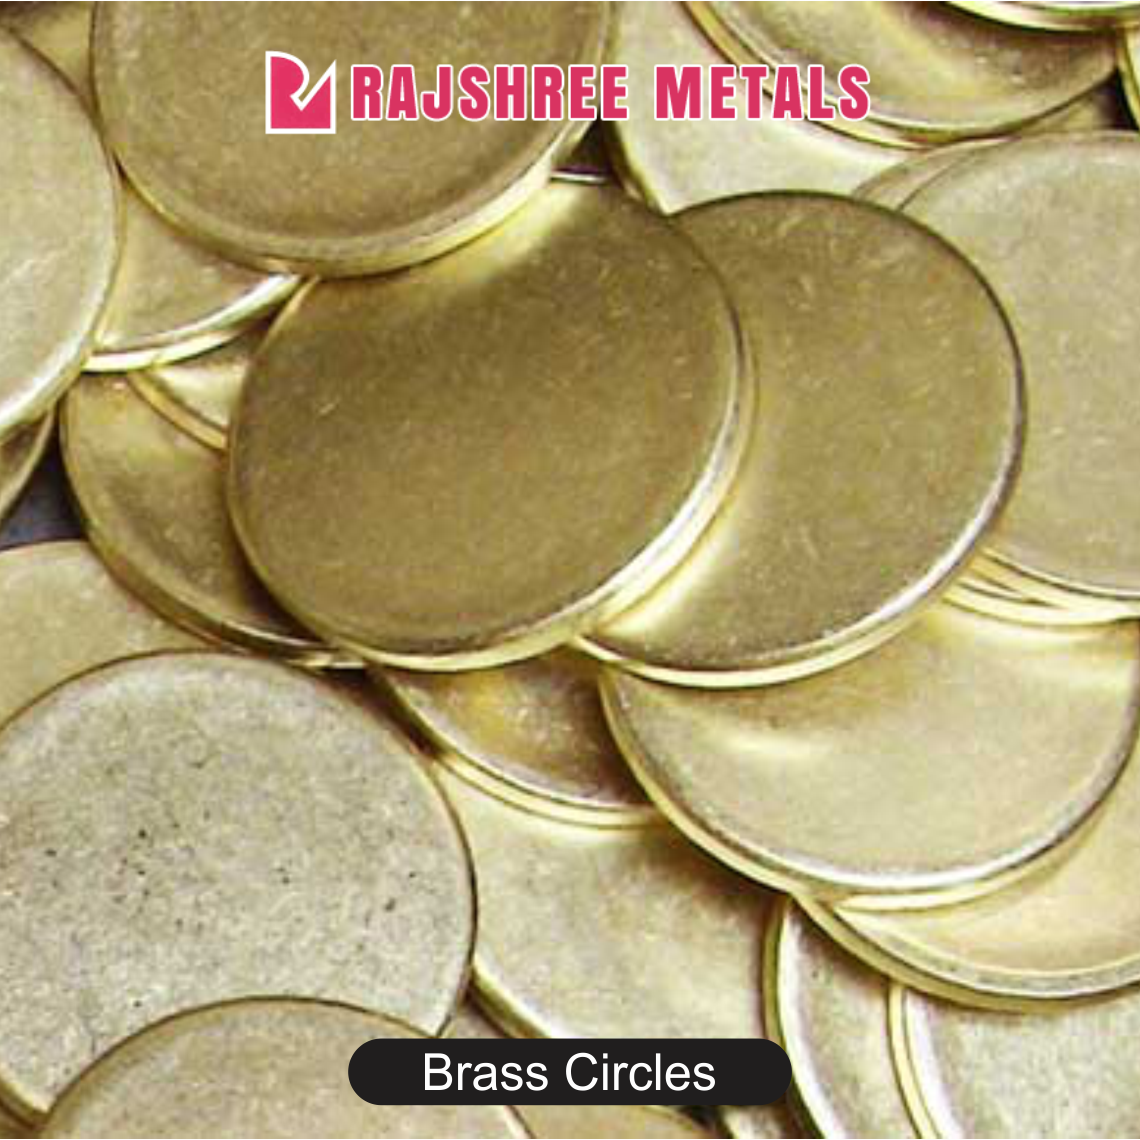 Brass circles

#rajshreemetals #brasscircles #metals #constructionindustries
Visit - rajshreemetals.com